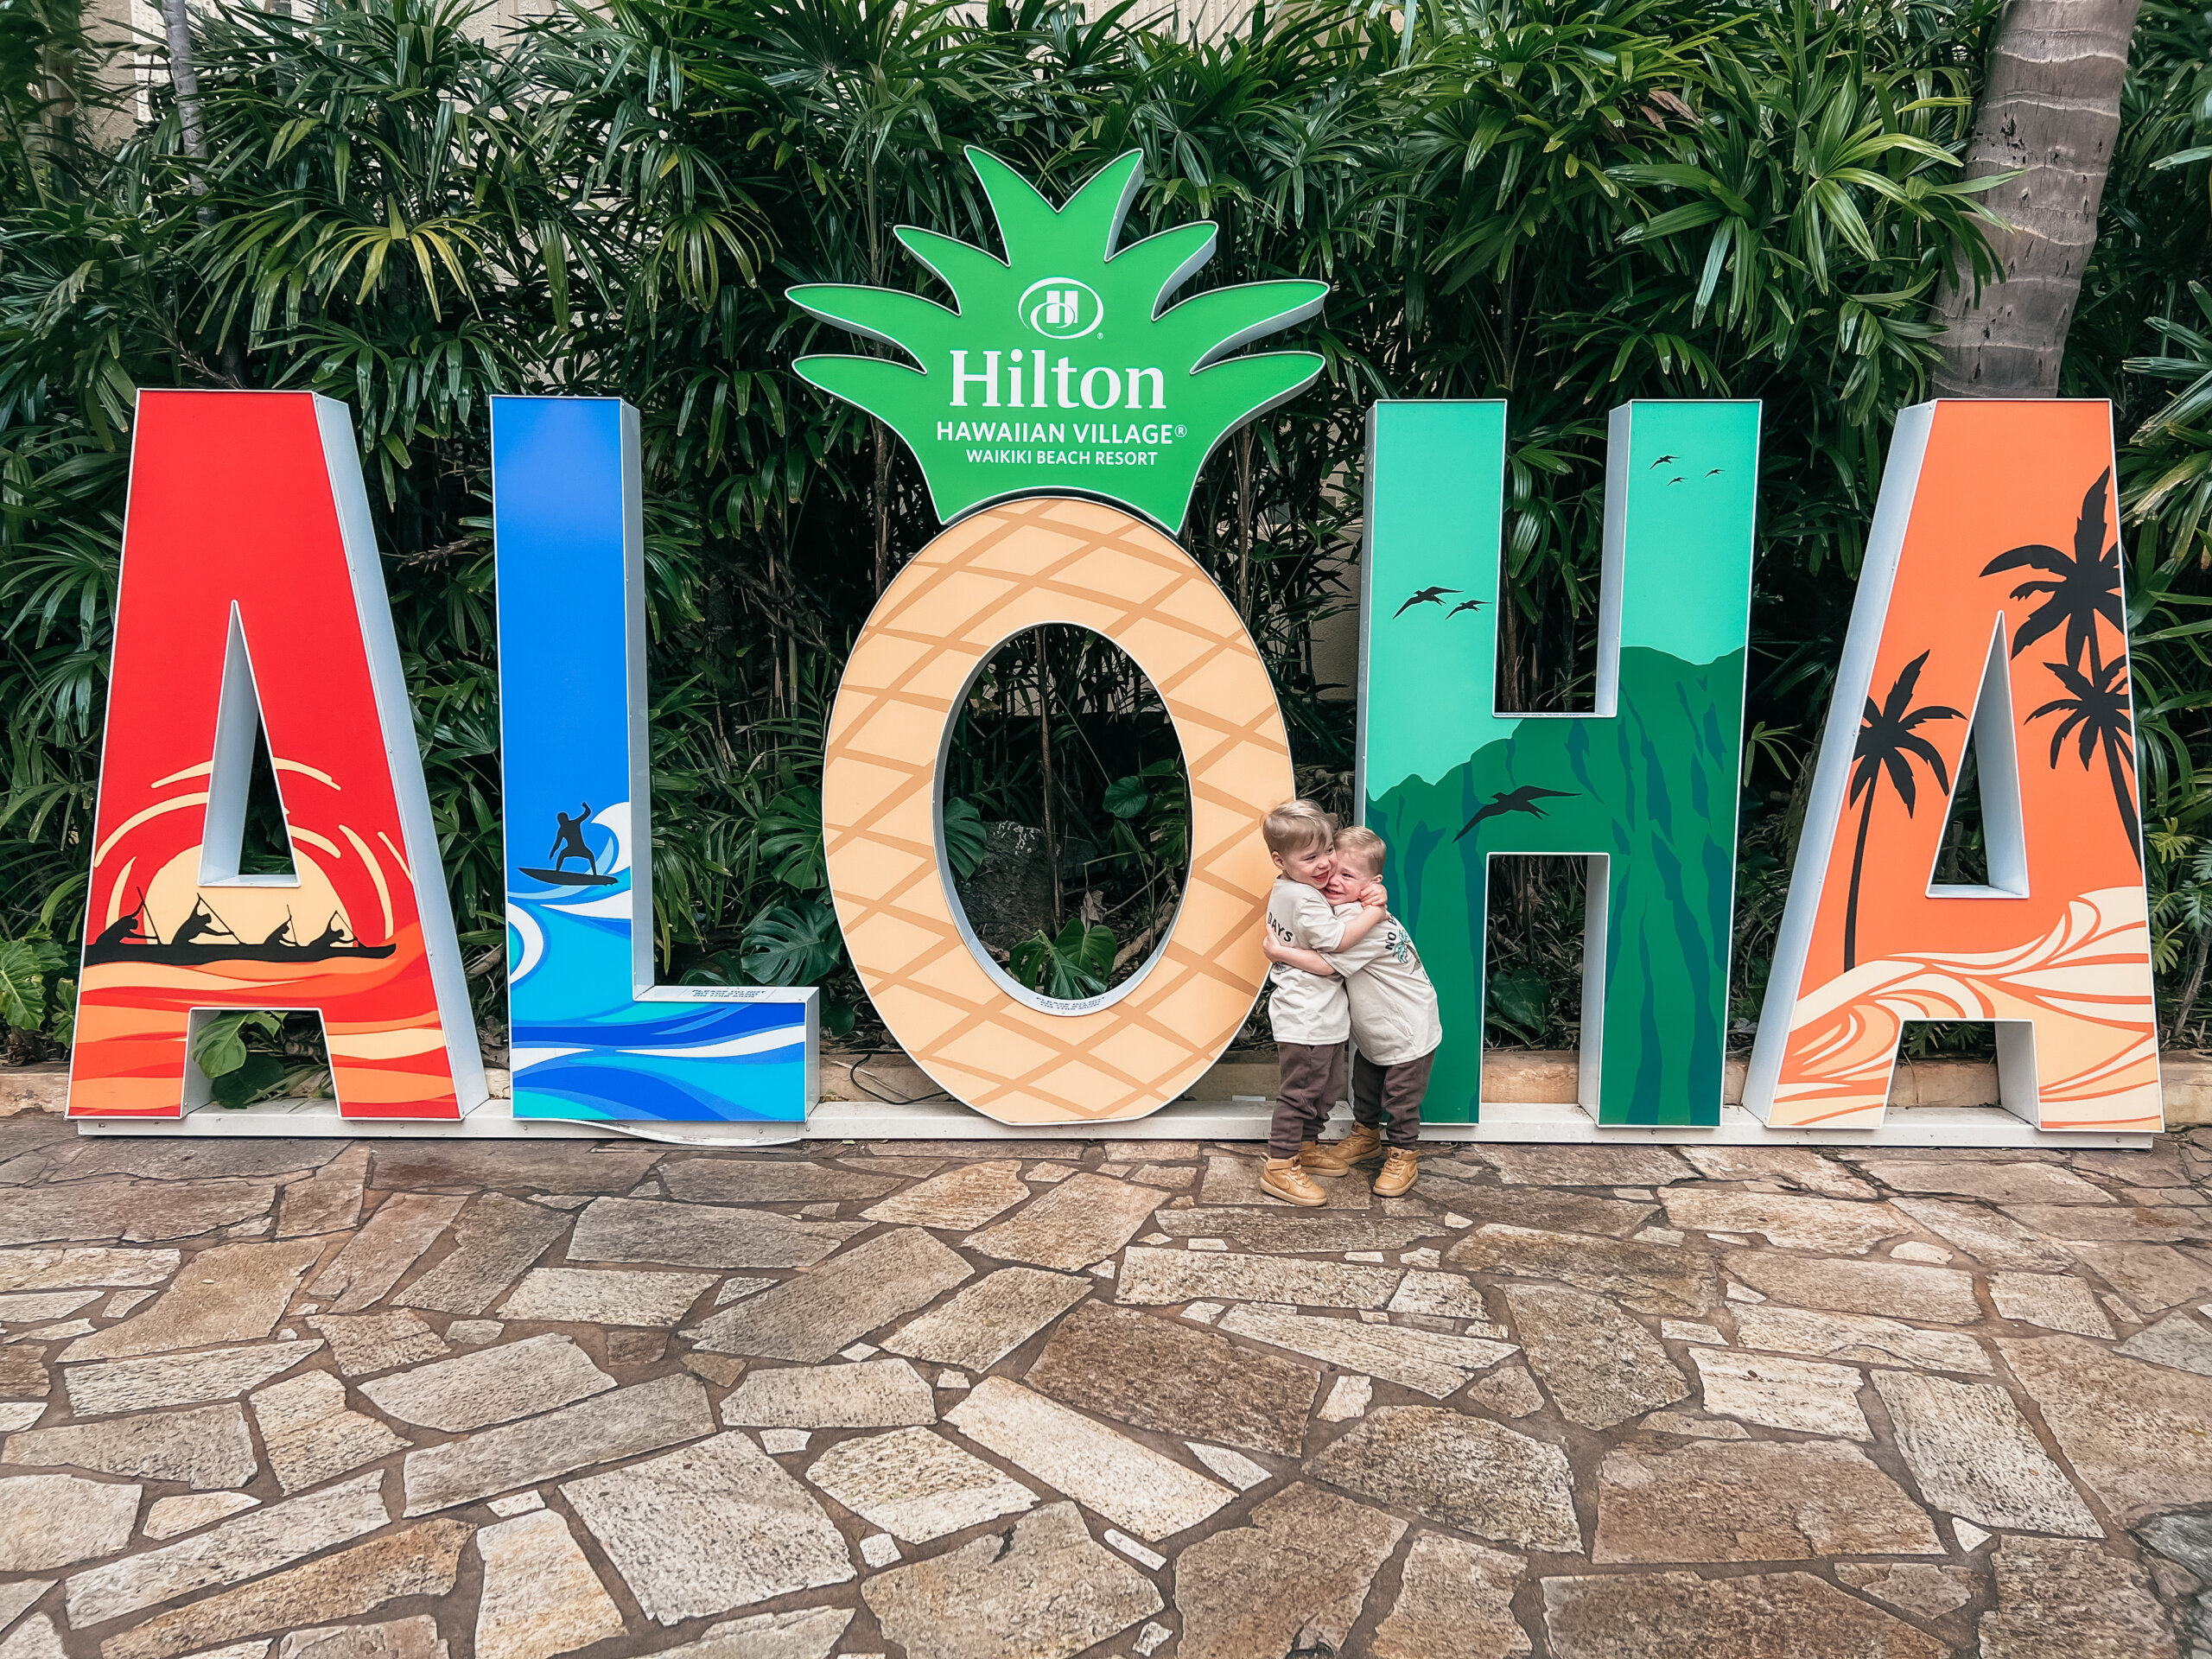 Two boys hugging by Aloha sign